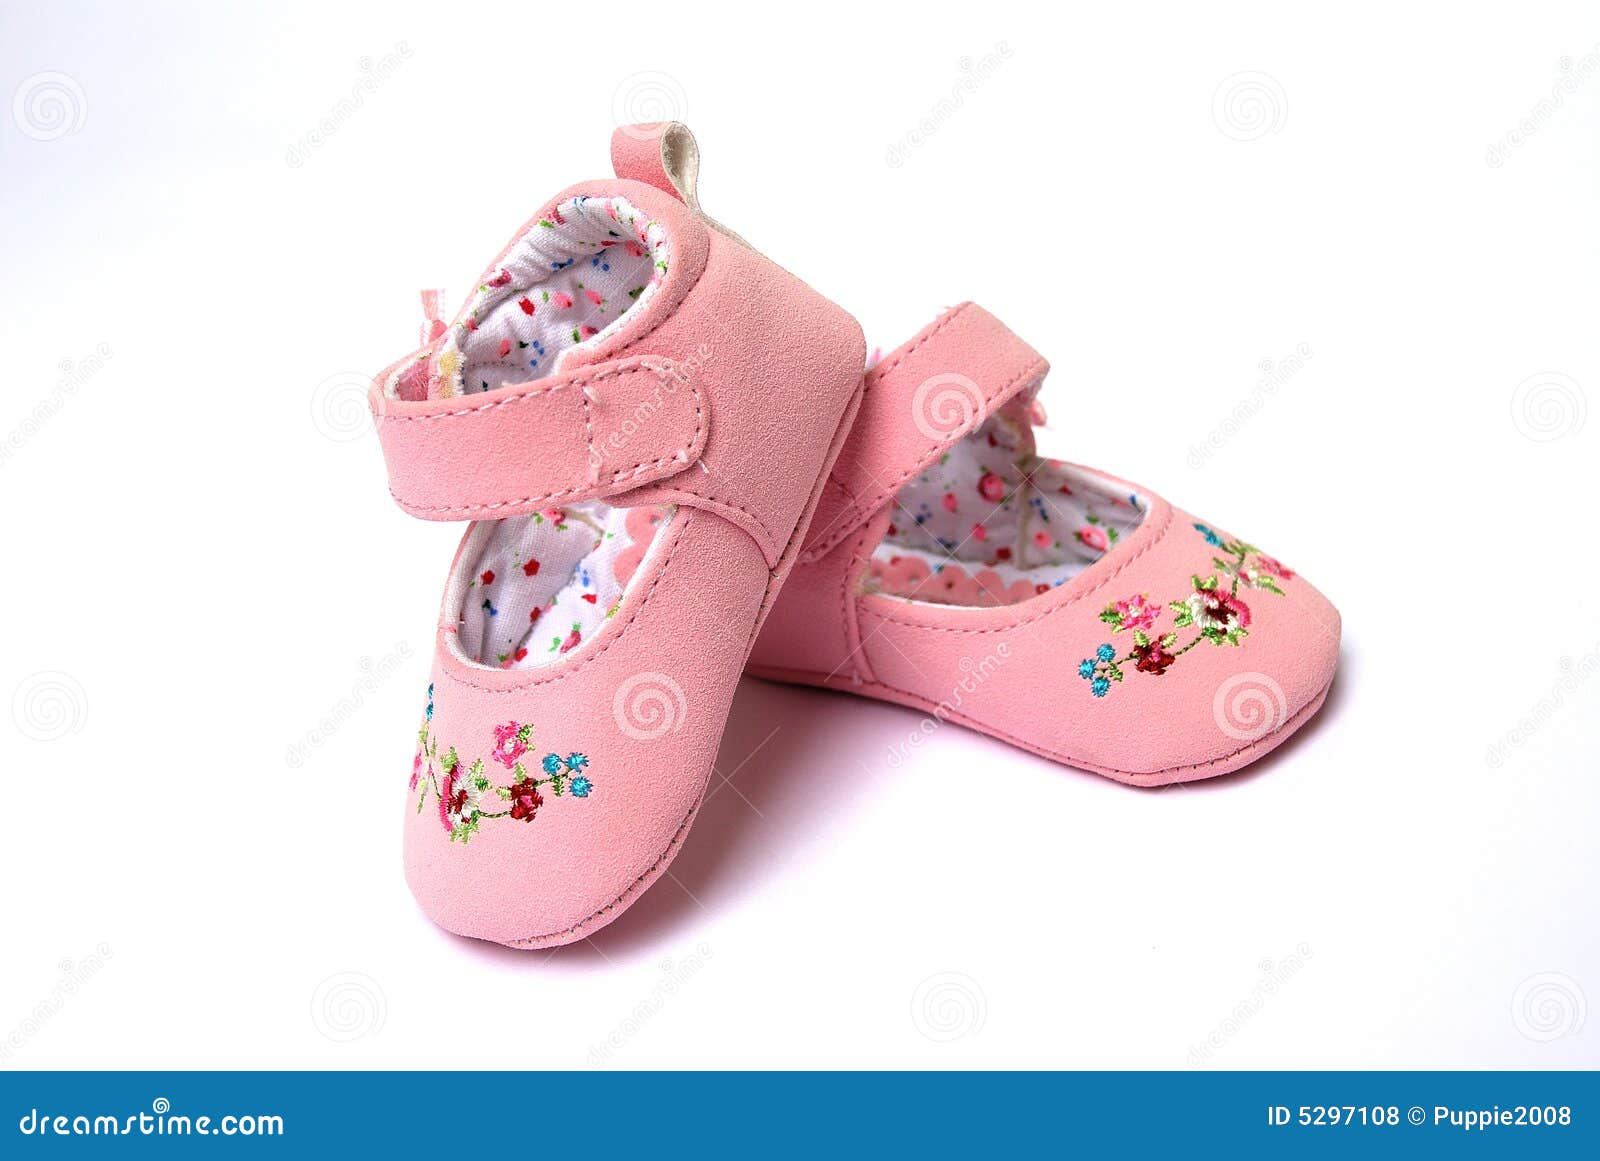 Keds 粉色 小白鞋 白色 粉紅色 全白 粉標 帆布 粉色鞋釦 經典款 布鞋 基本款 帆布鞋 休閒鞋 WF59160 | 蝦皮購物